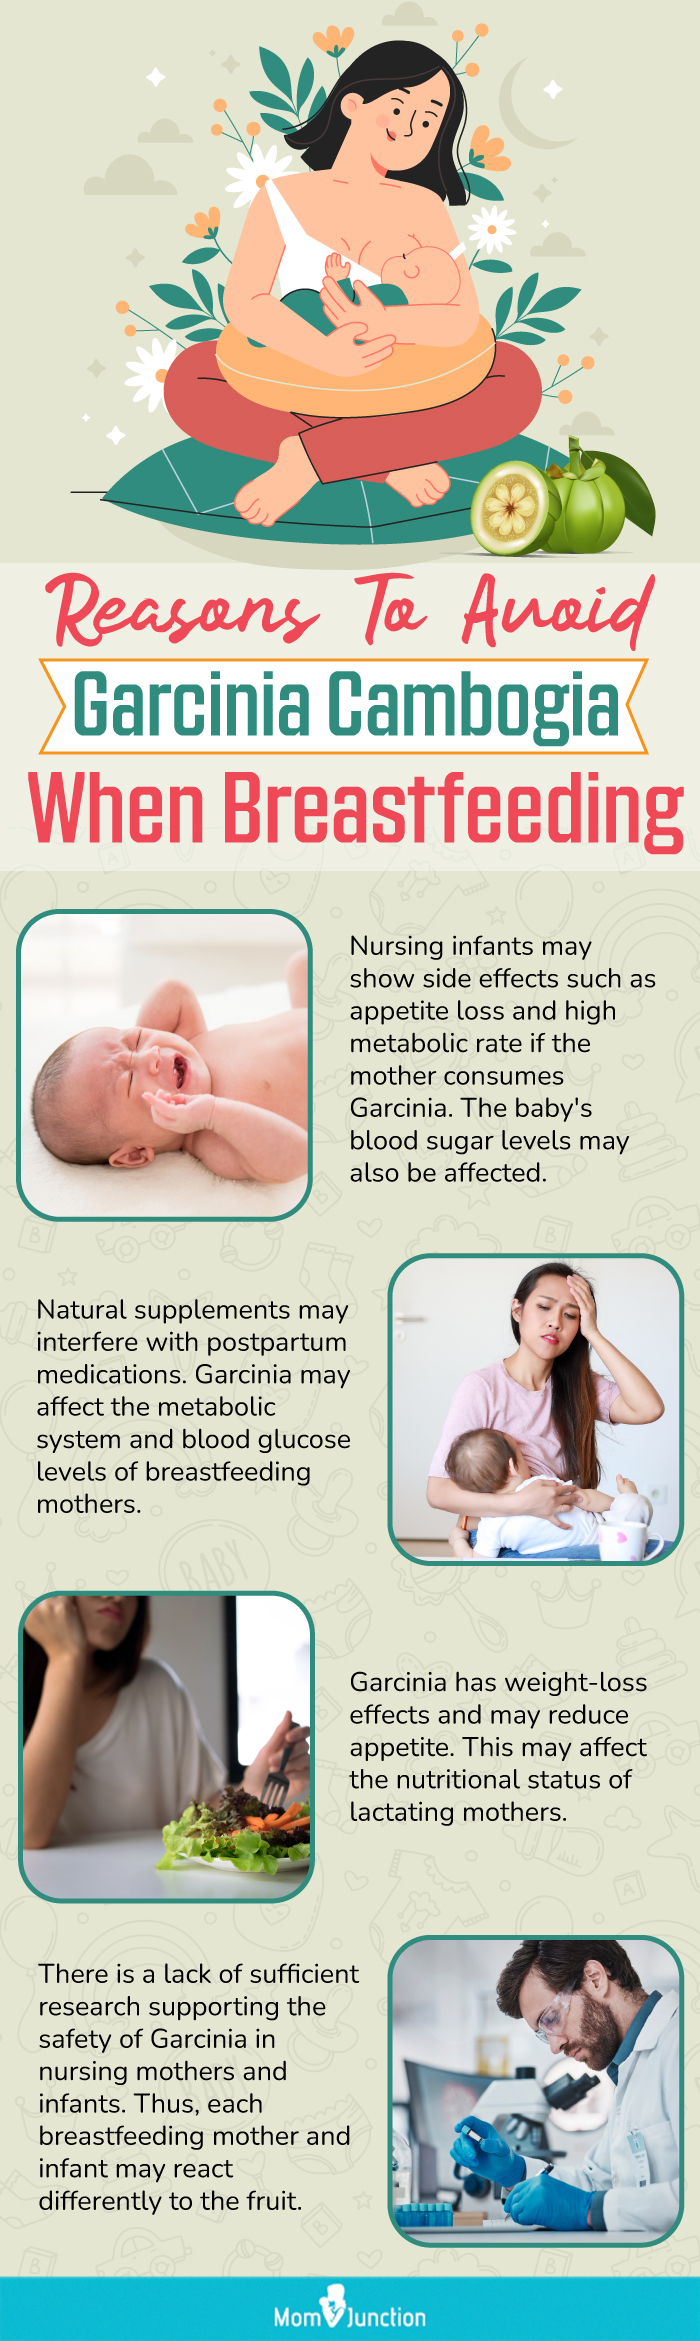 reasons to avoid garcinia cambogia when breastfeeding (infographic) 